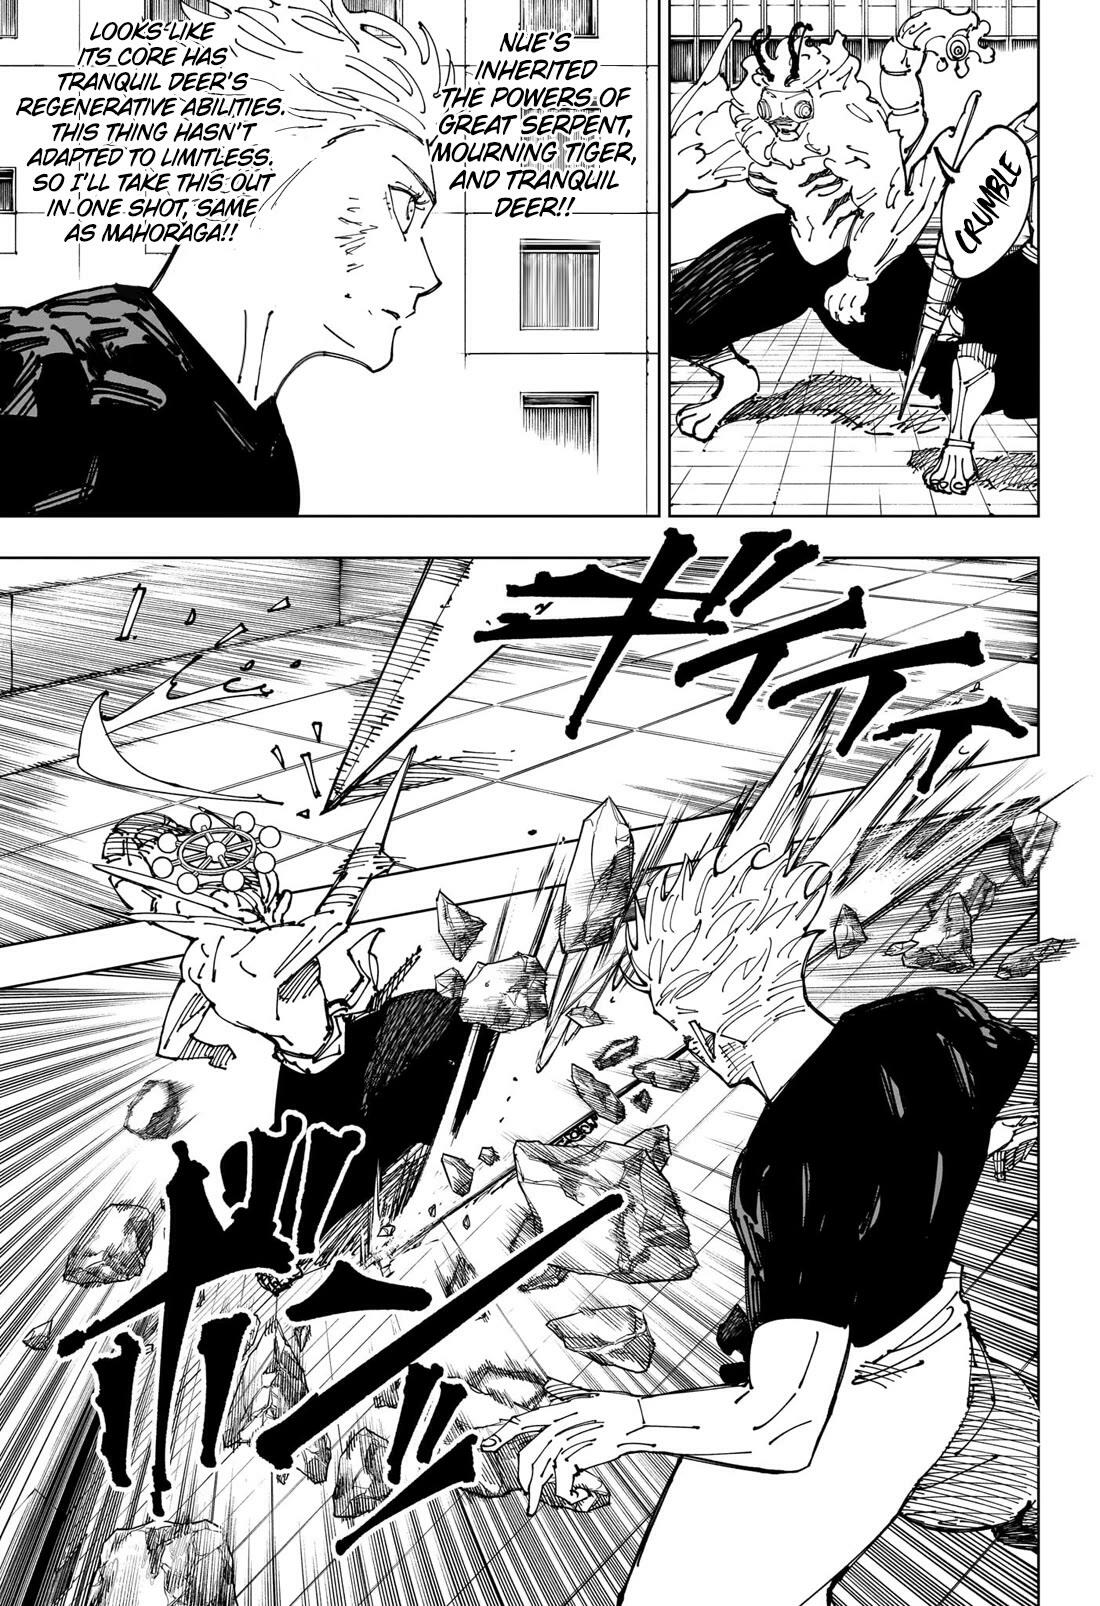 Jujutsu Kaisen Chapter 234: The Decisive Battle In The Uninhabited, Demon-Infested Shinjuku ⑫ page 8 - Mangakakalot